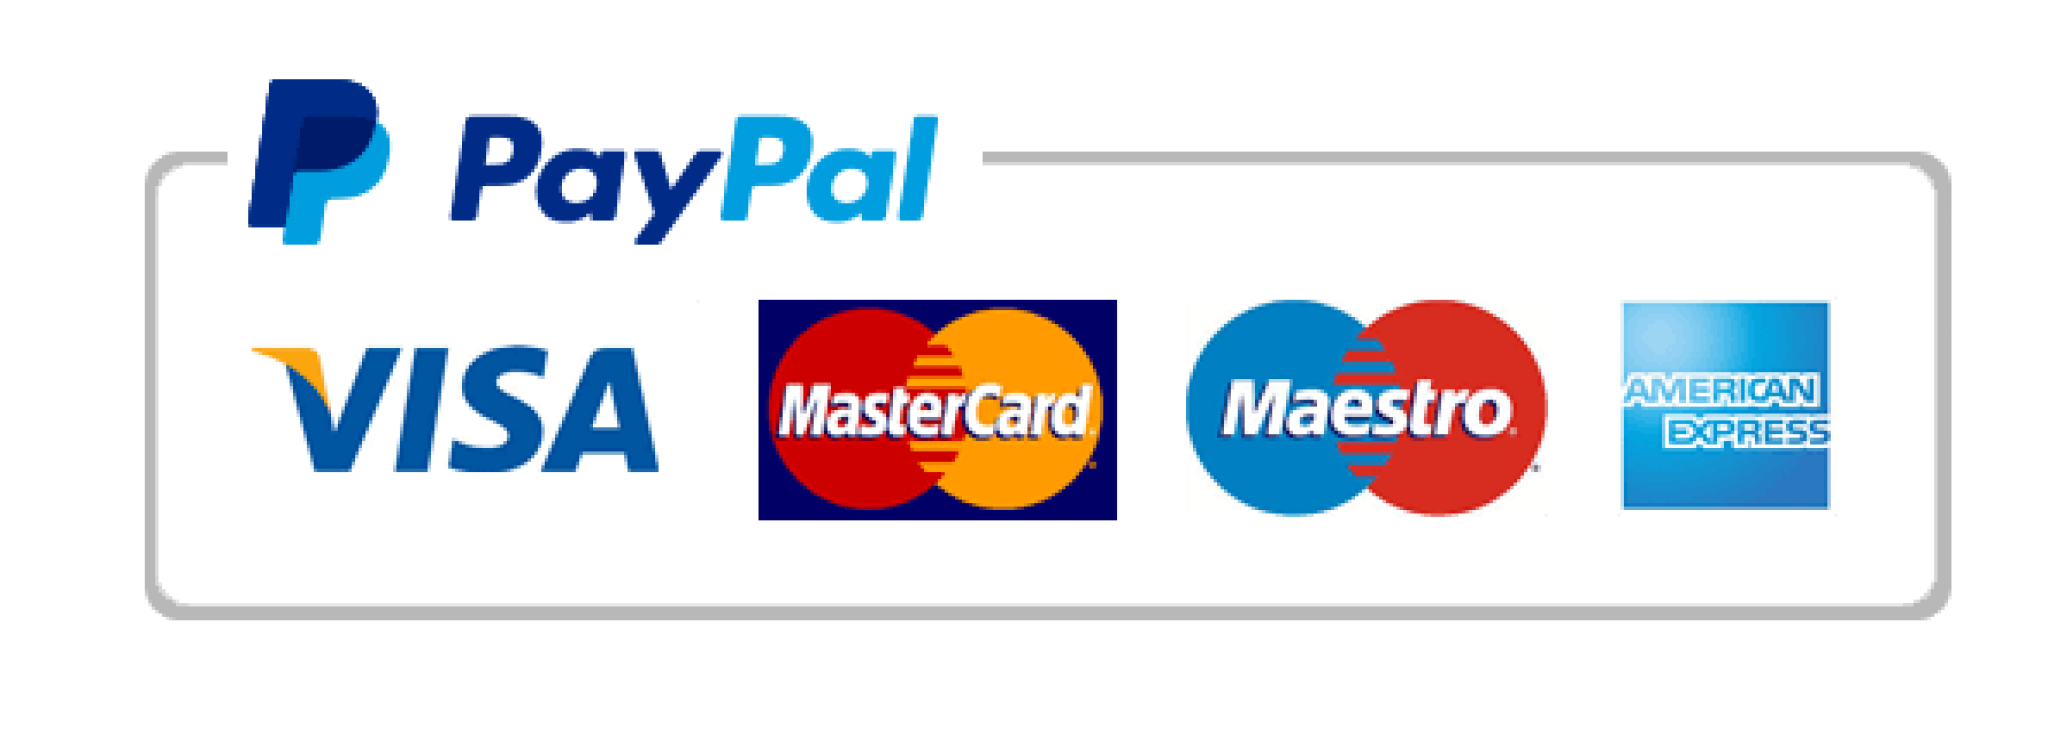 PAYPAL логотип. PAYPAL иконка. Платежная система PAYPAL. Карта visa MASTERCARD Maestro. Pay method